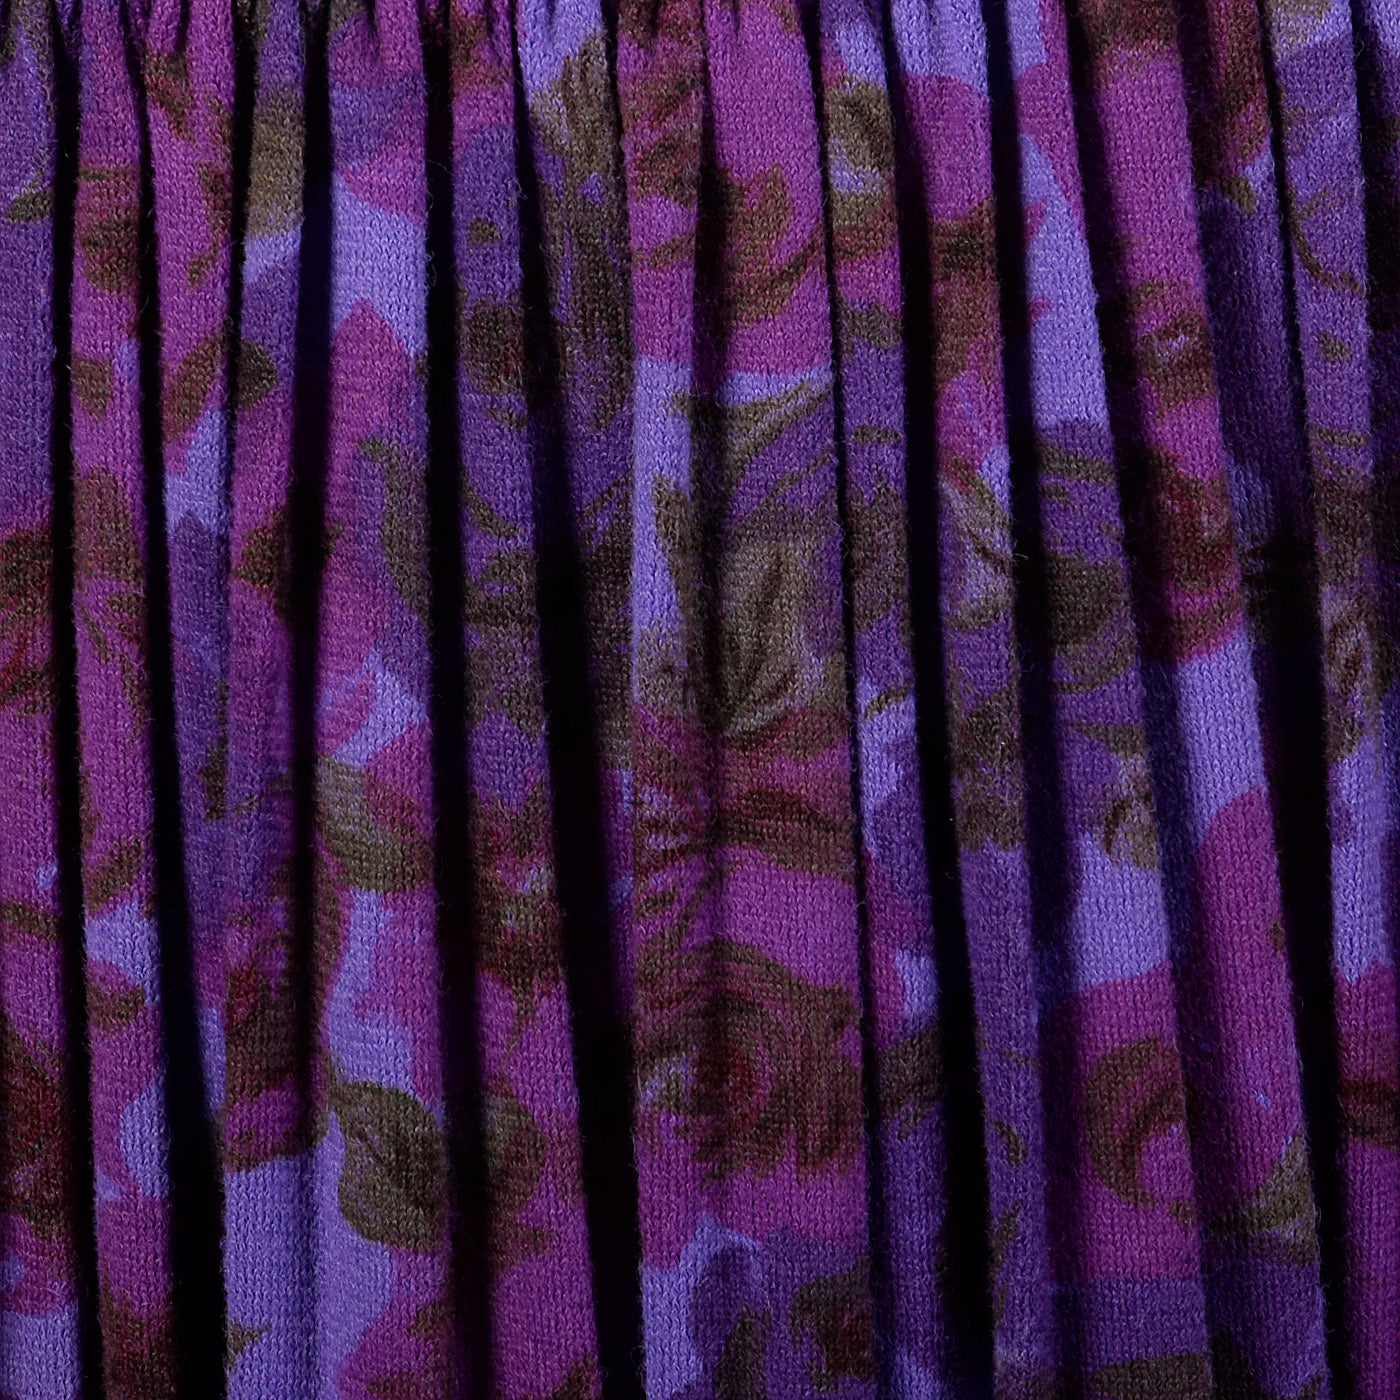 1960s Purple Floral Print Dress